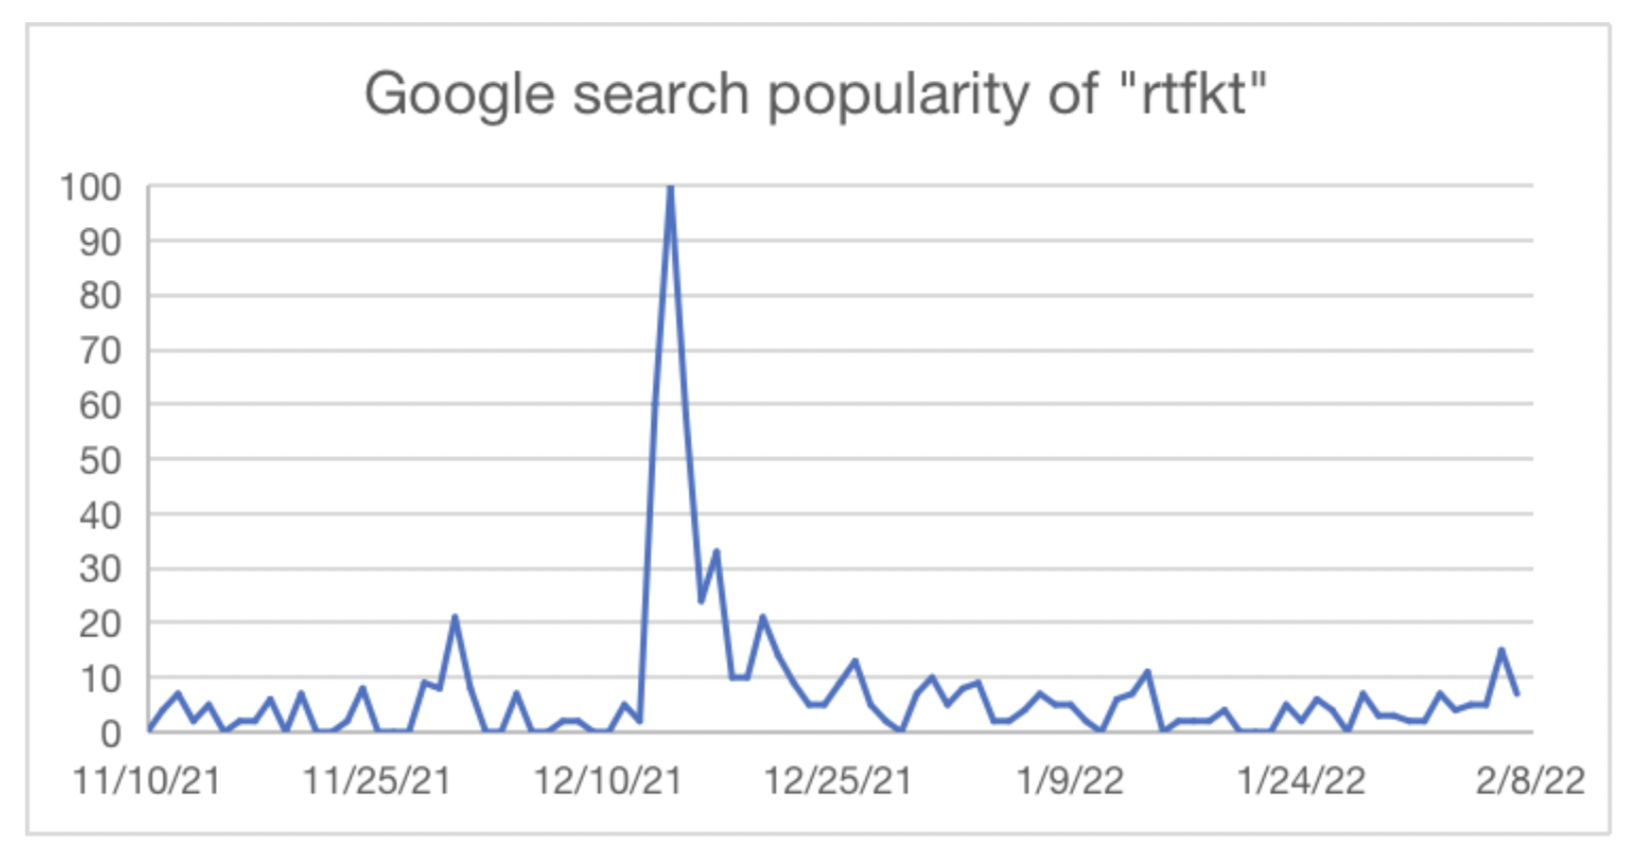 Data Source: Google Trends